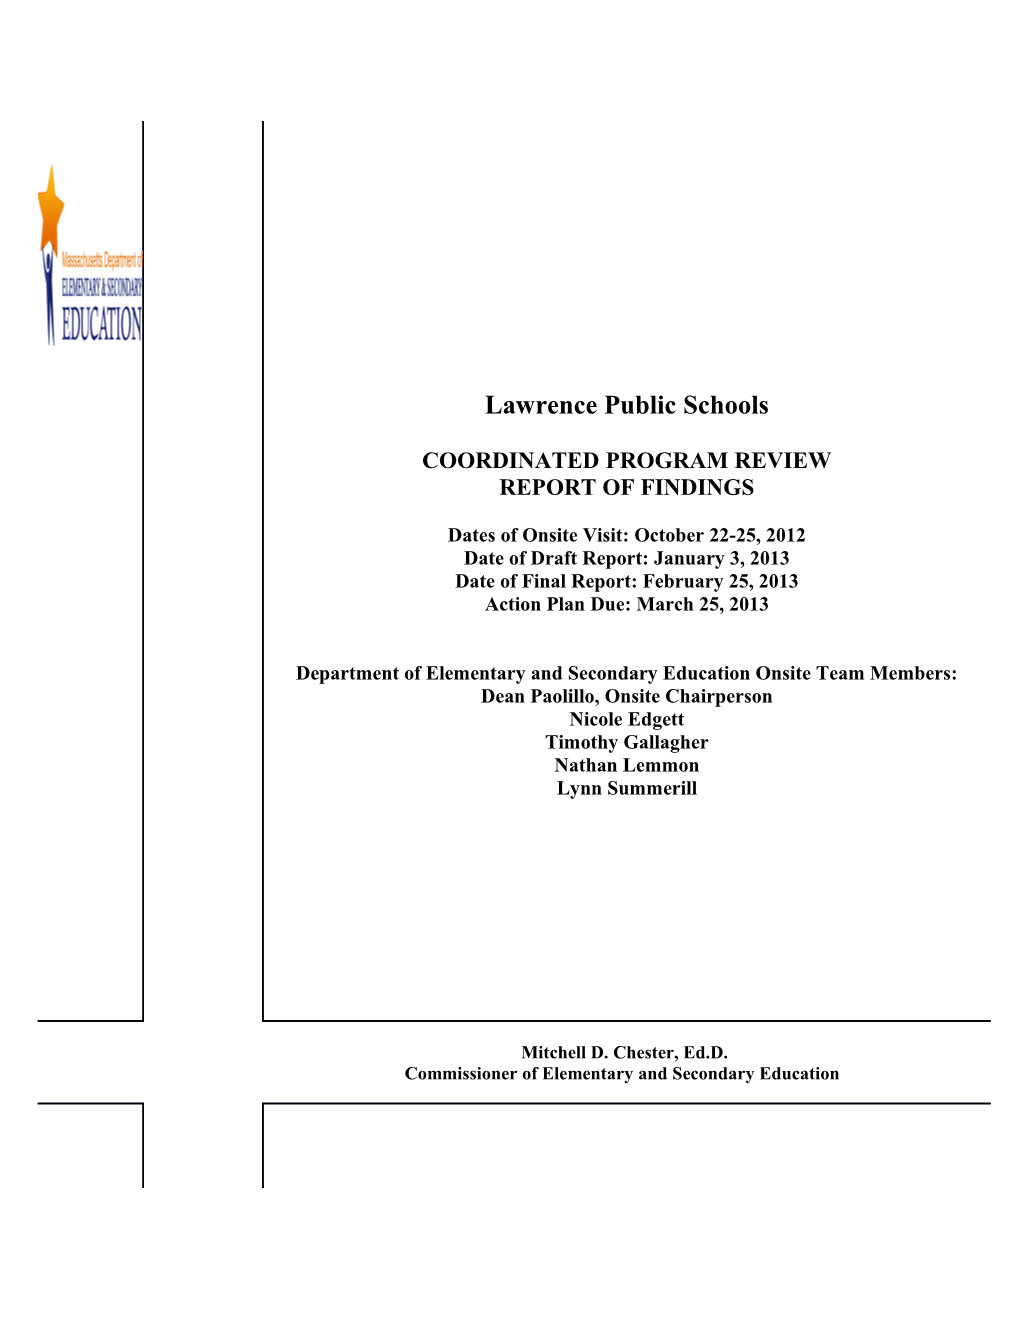 Lawrence Public Schools CPR Final Report 2013